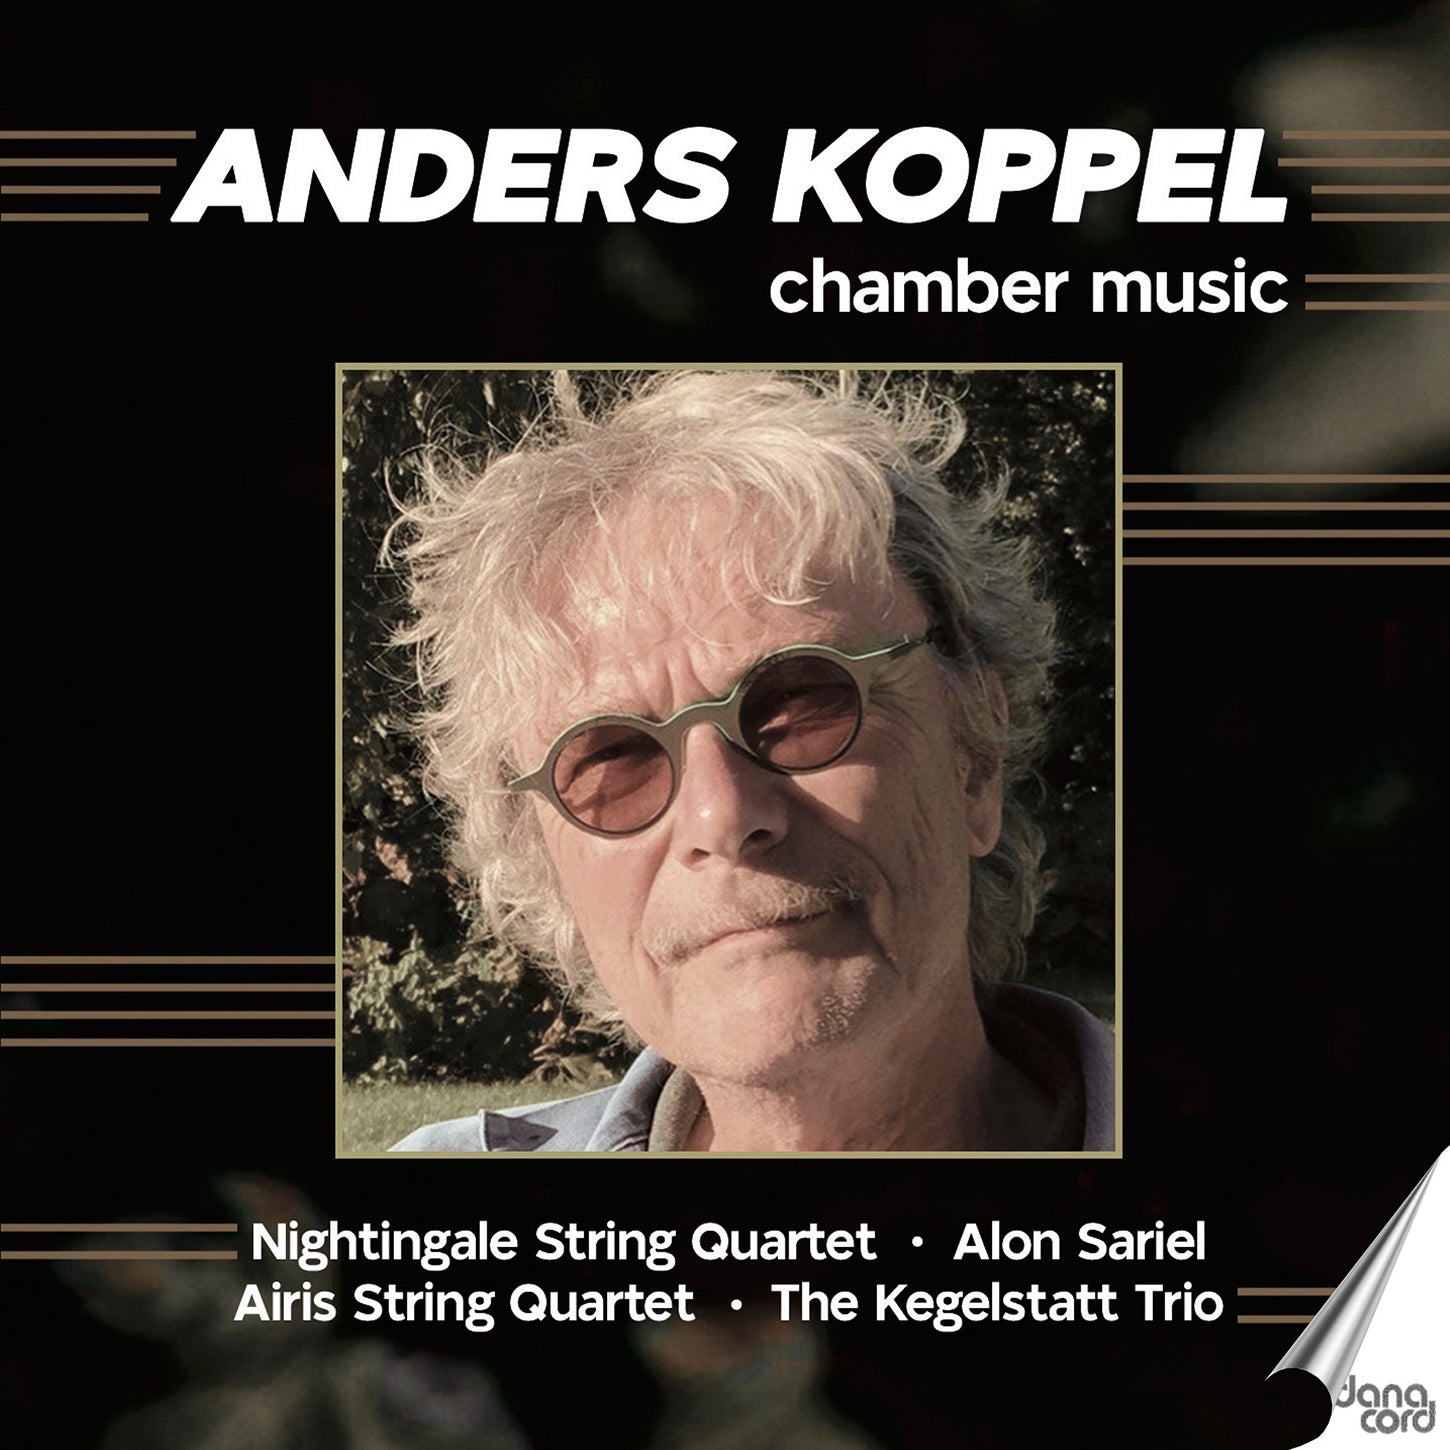 Koppel: Chamber Music / Nightingale String Quartet, Airis Quartet, Kegelstatt Trio